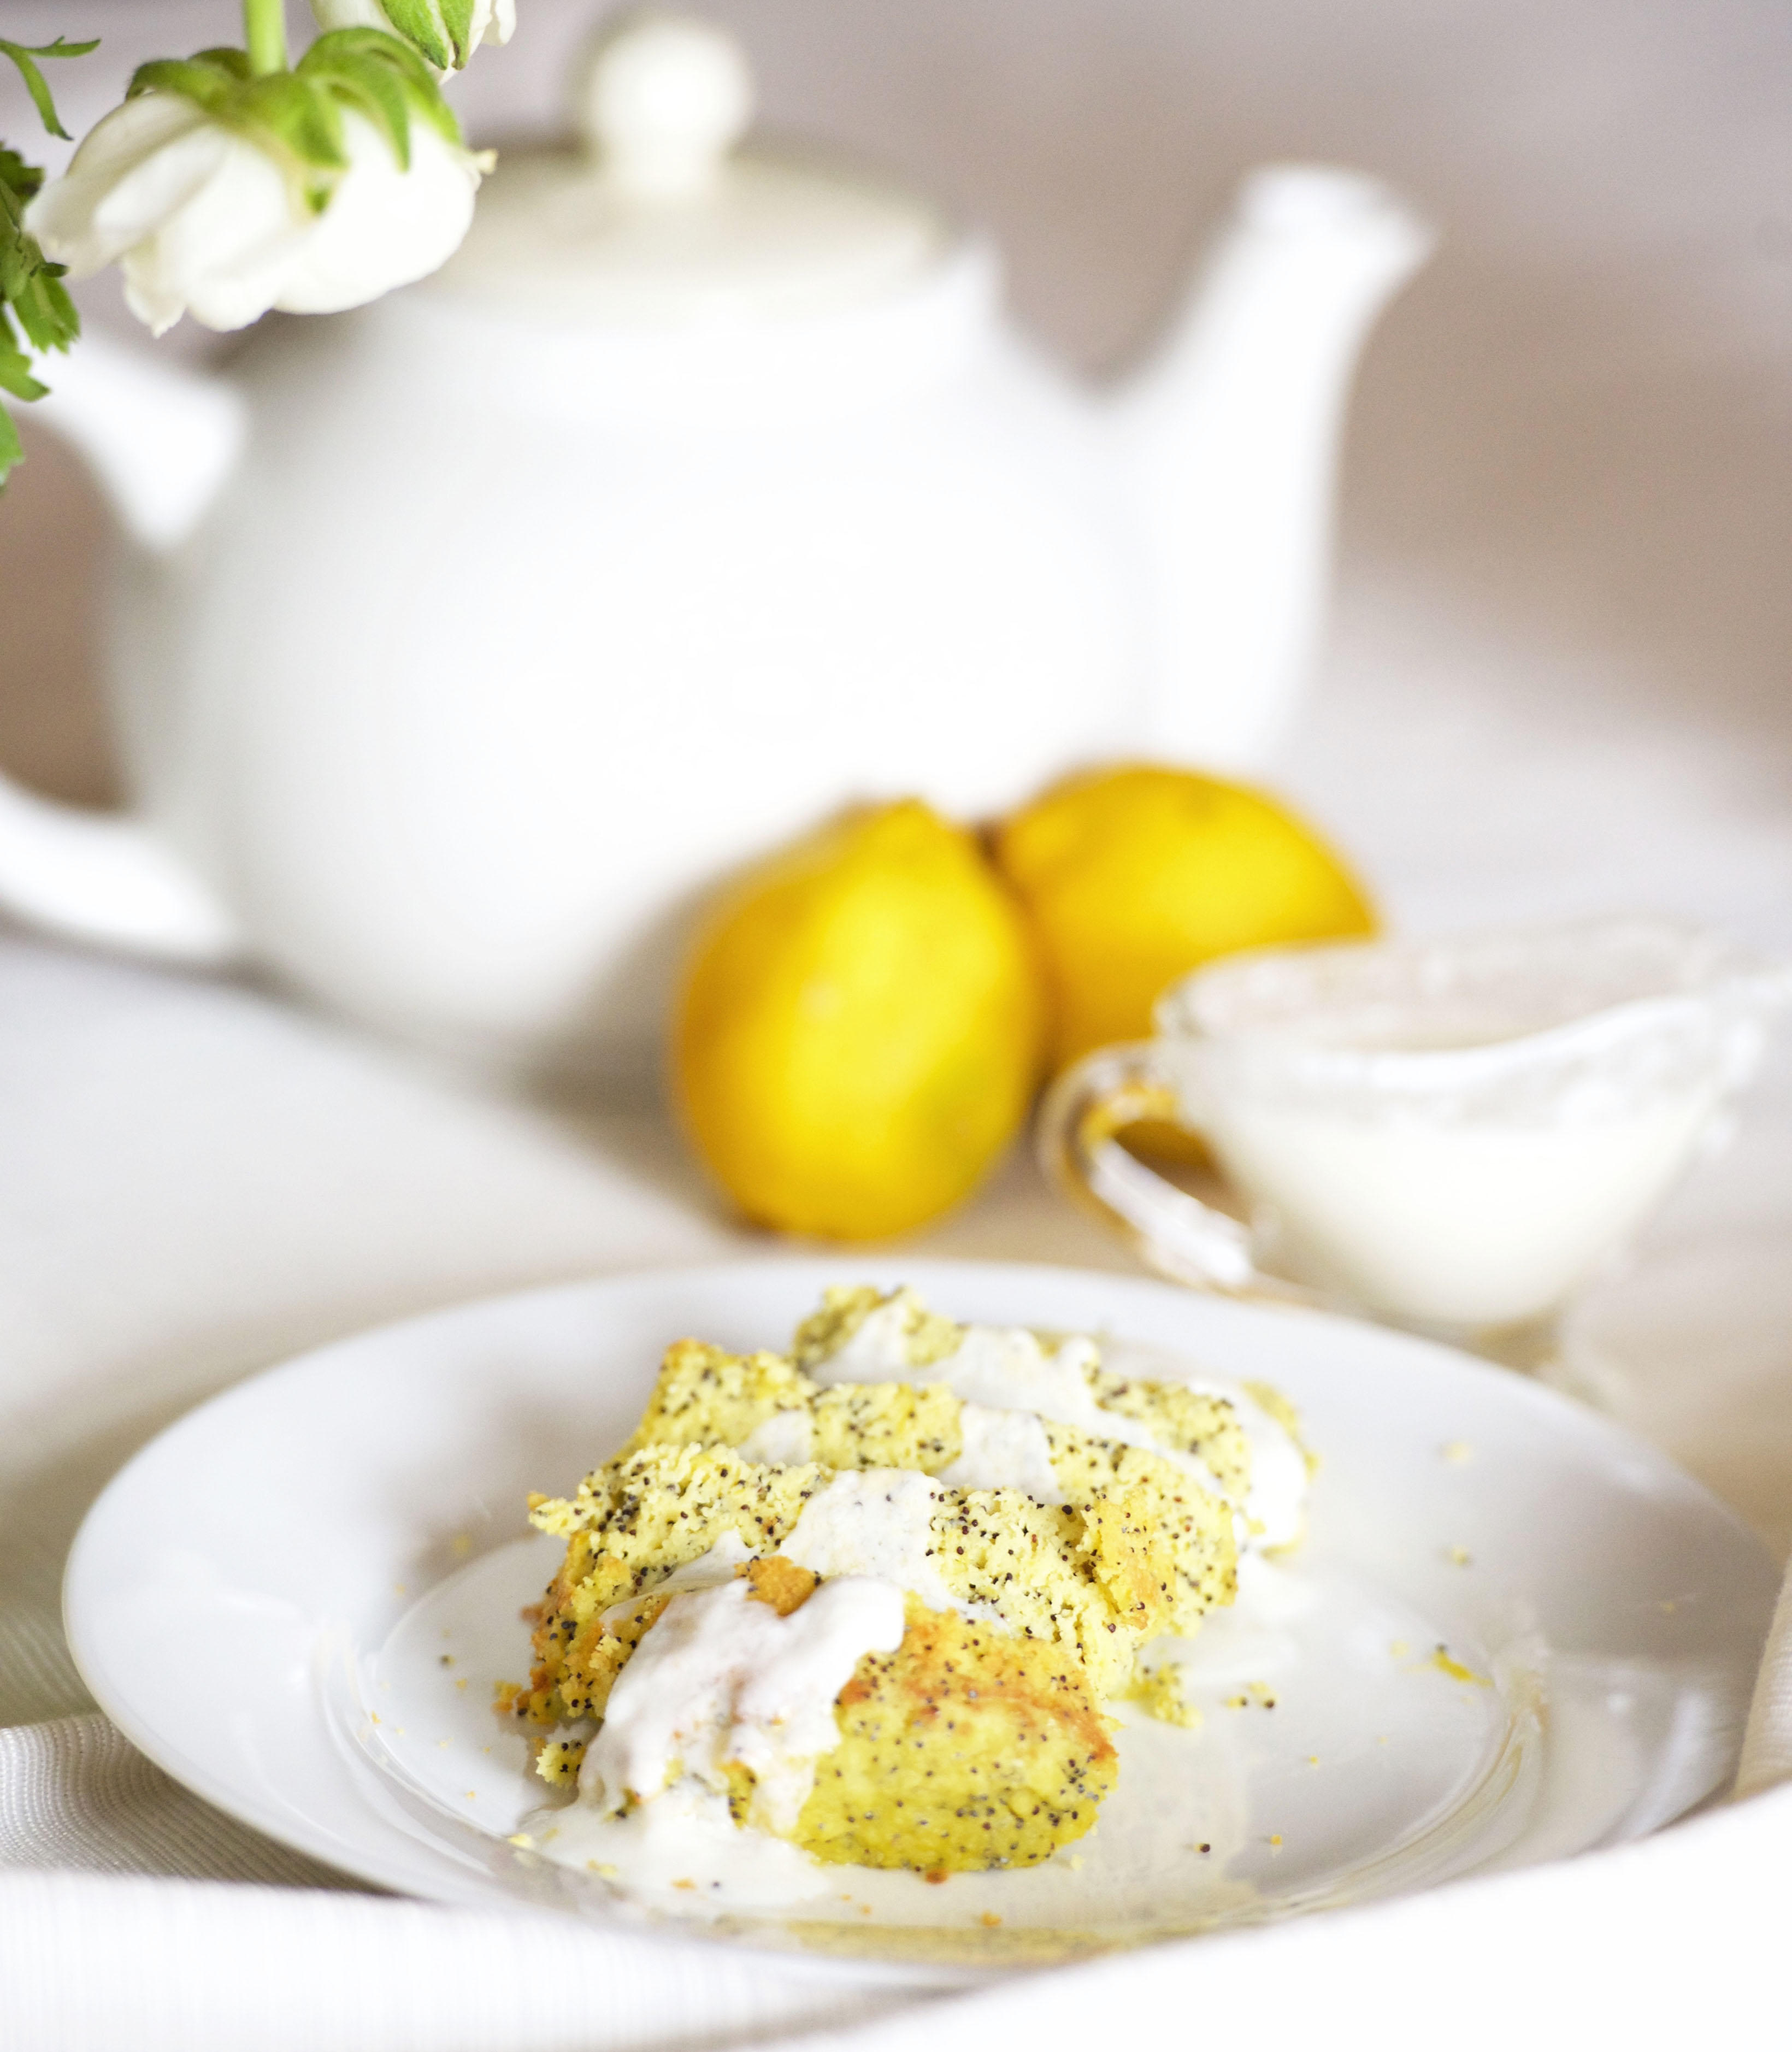 Photo of sliced Paleo Lemon Poppyseed Jar Cakes on a plate.